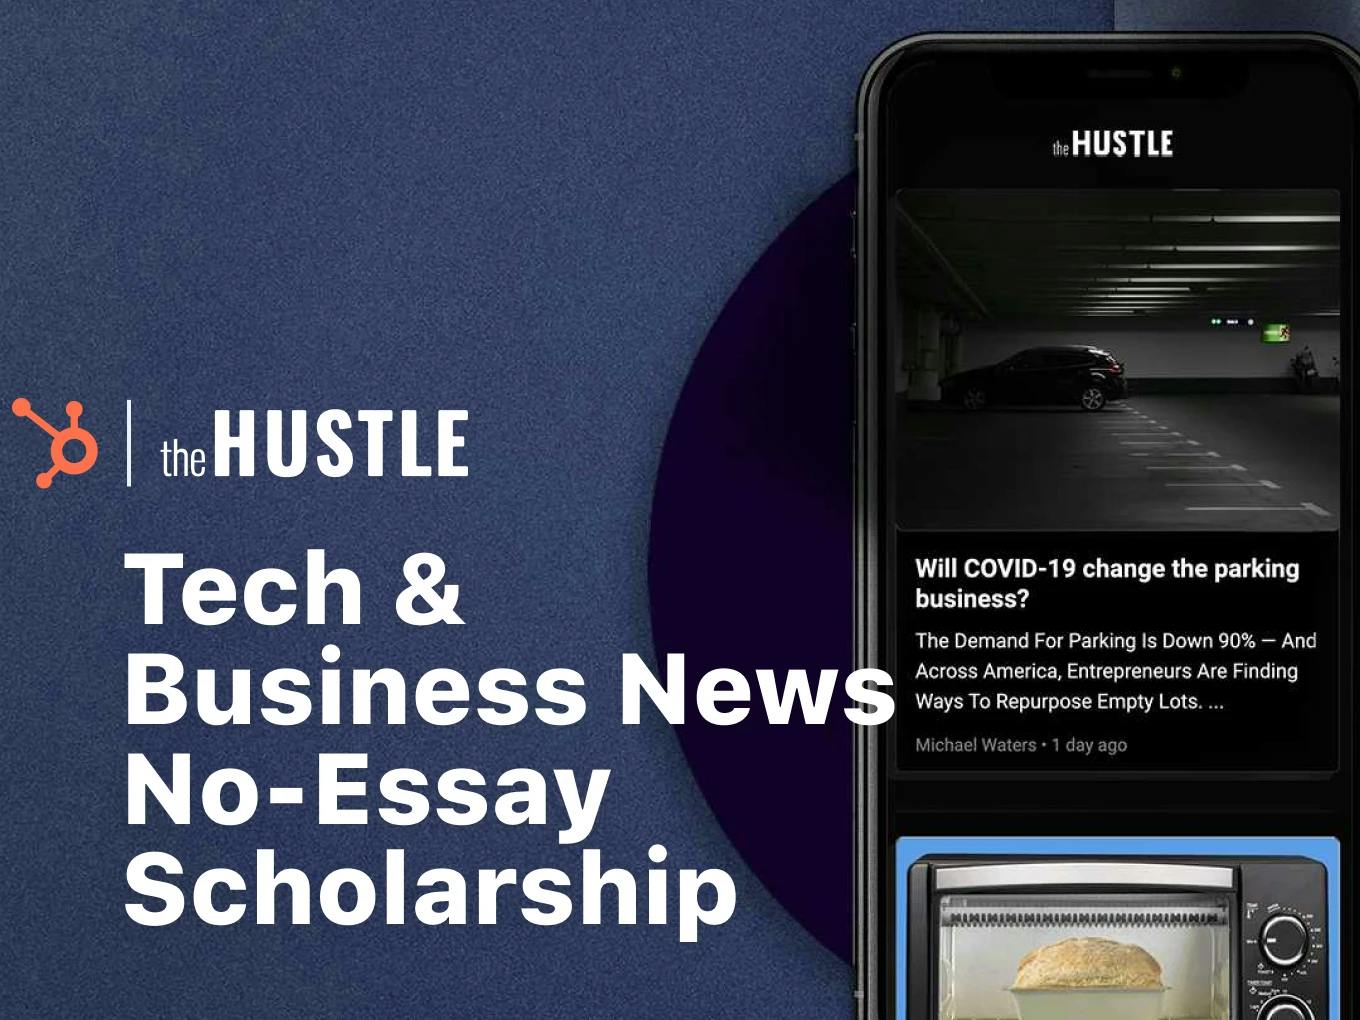 Hustle Tech & Business News No-Essay Scholarship